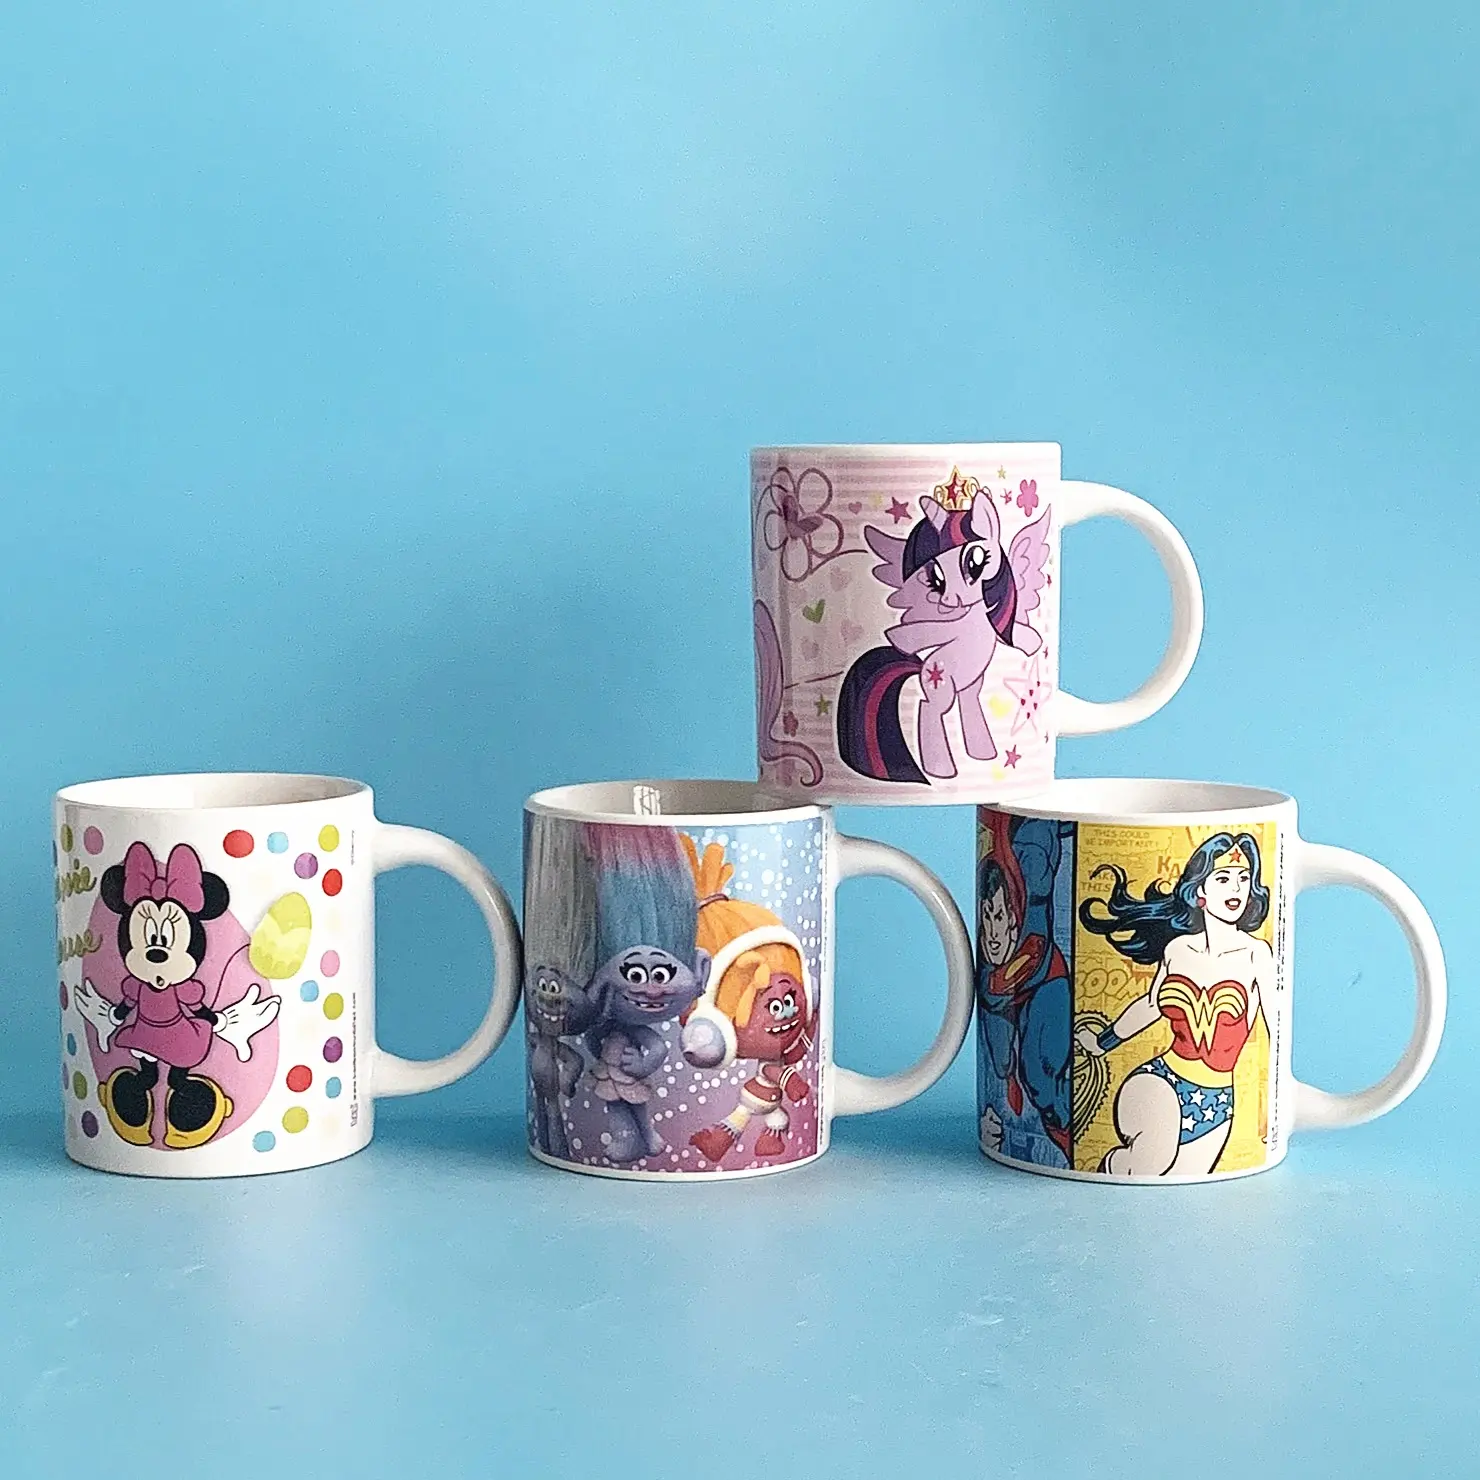 Wholesale 8 oz round ceramic mug with decal artwork printing Personalized cute pattern decal blank white ceramic cup/mug